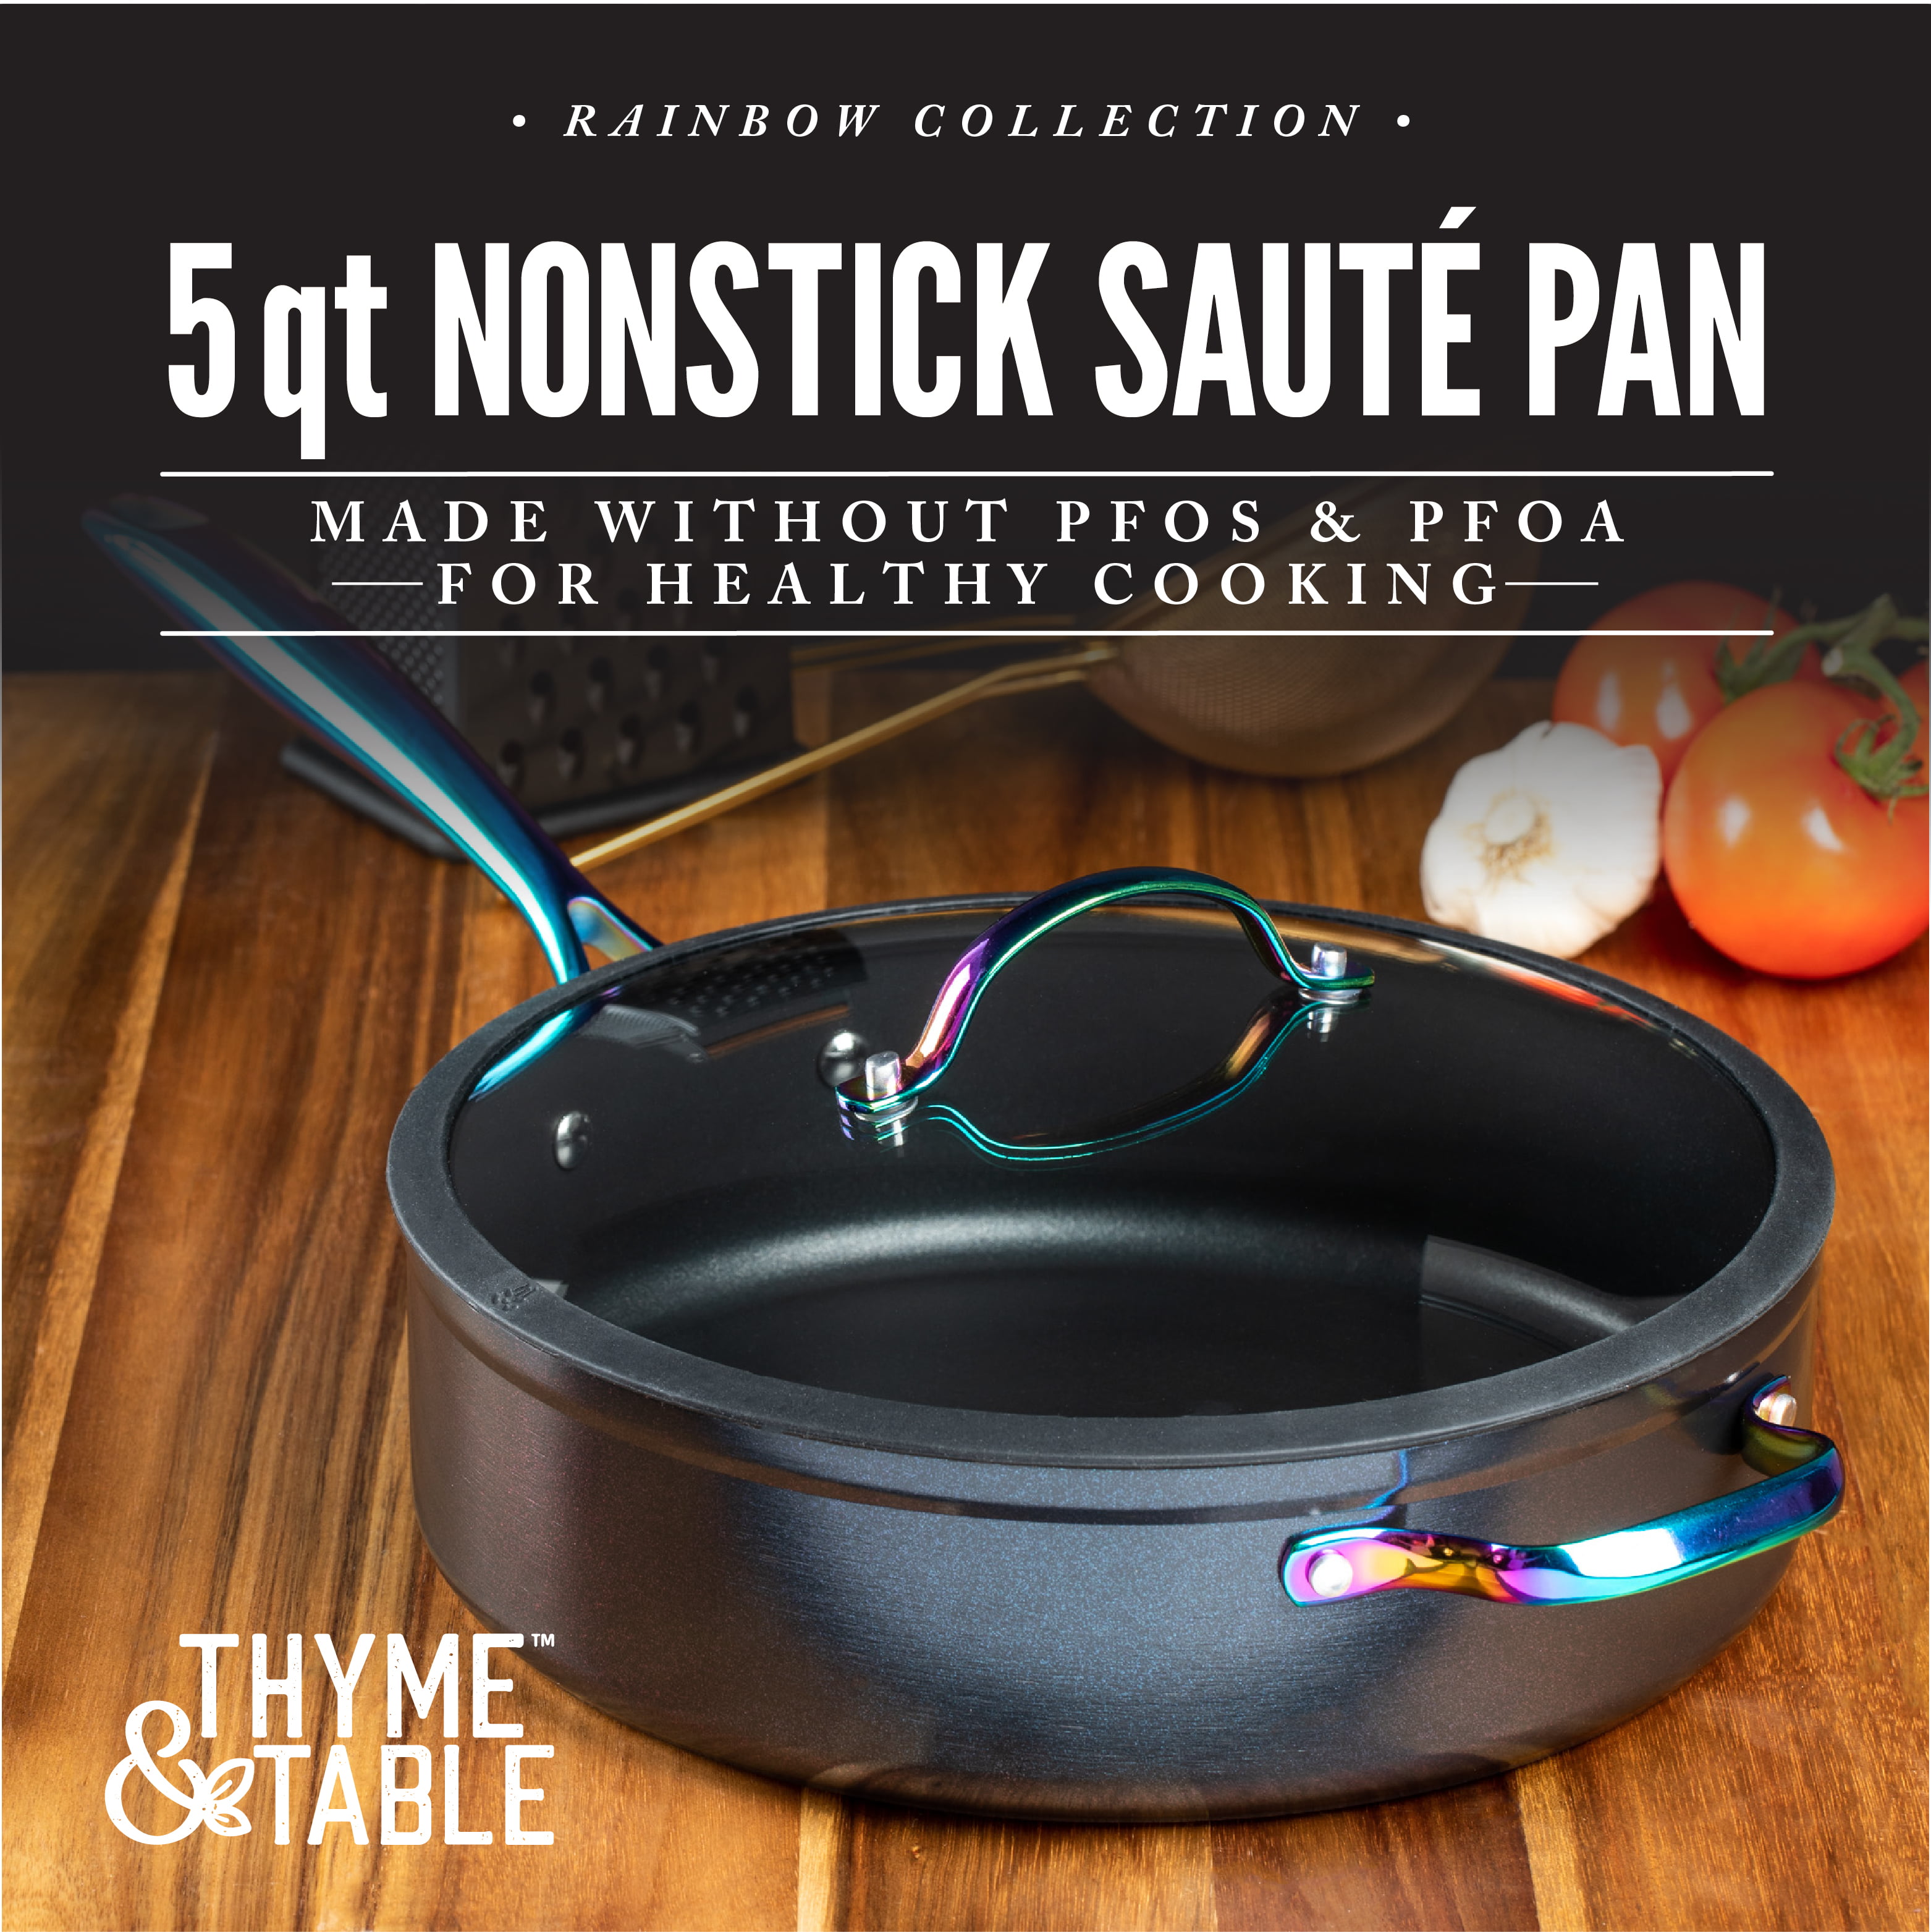 Nordic Ware 3-in-1 Divided Saute Pan - 9533069